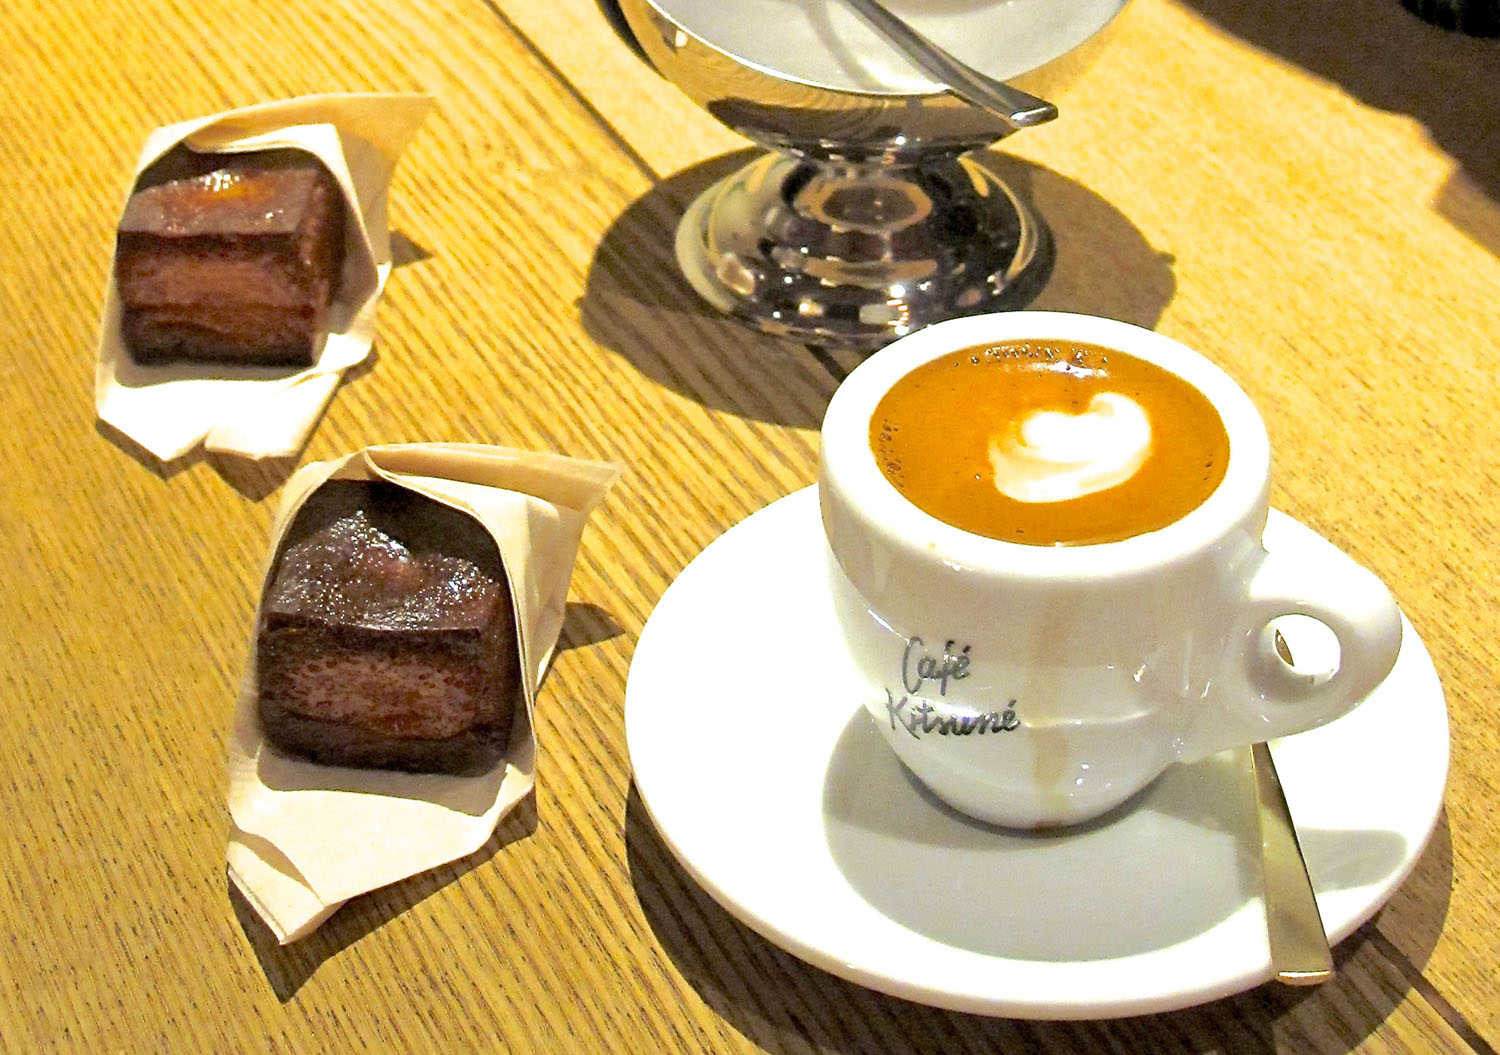 Kute kubes: Omotesando Koffee's cuboid Baked Custard treats are served here at Cafe Kitsune. | ROBBIE SWINNERTON